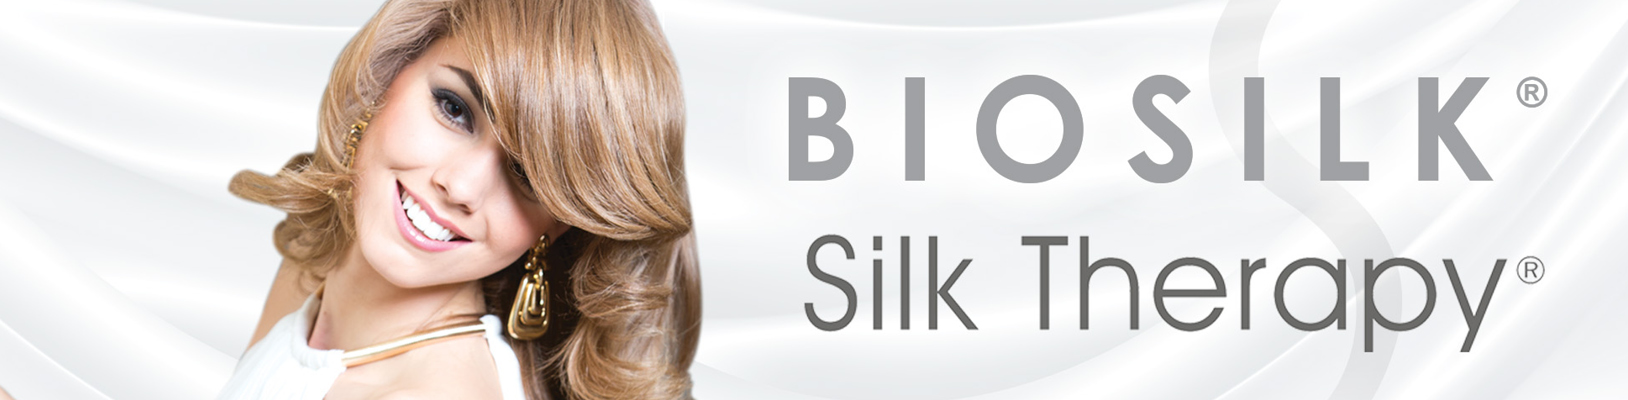 Biosilk Silk Therapy